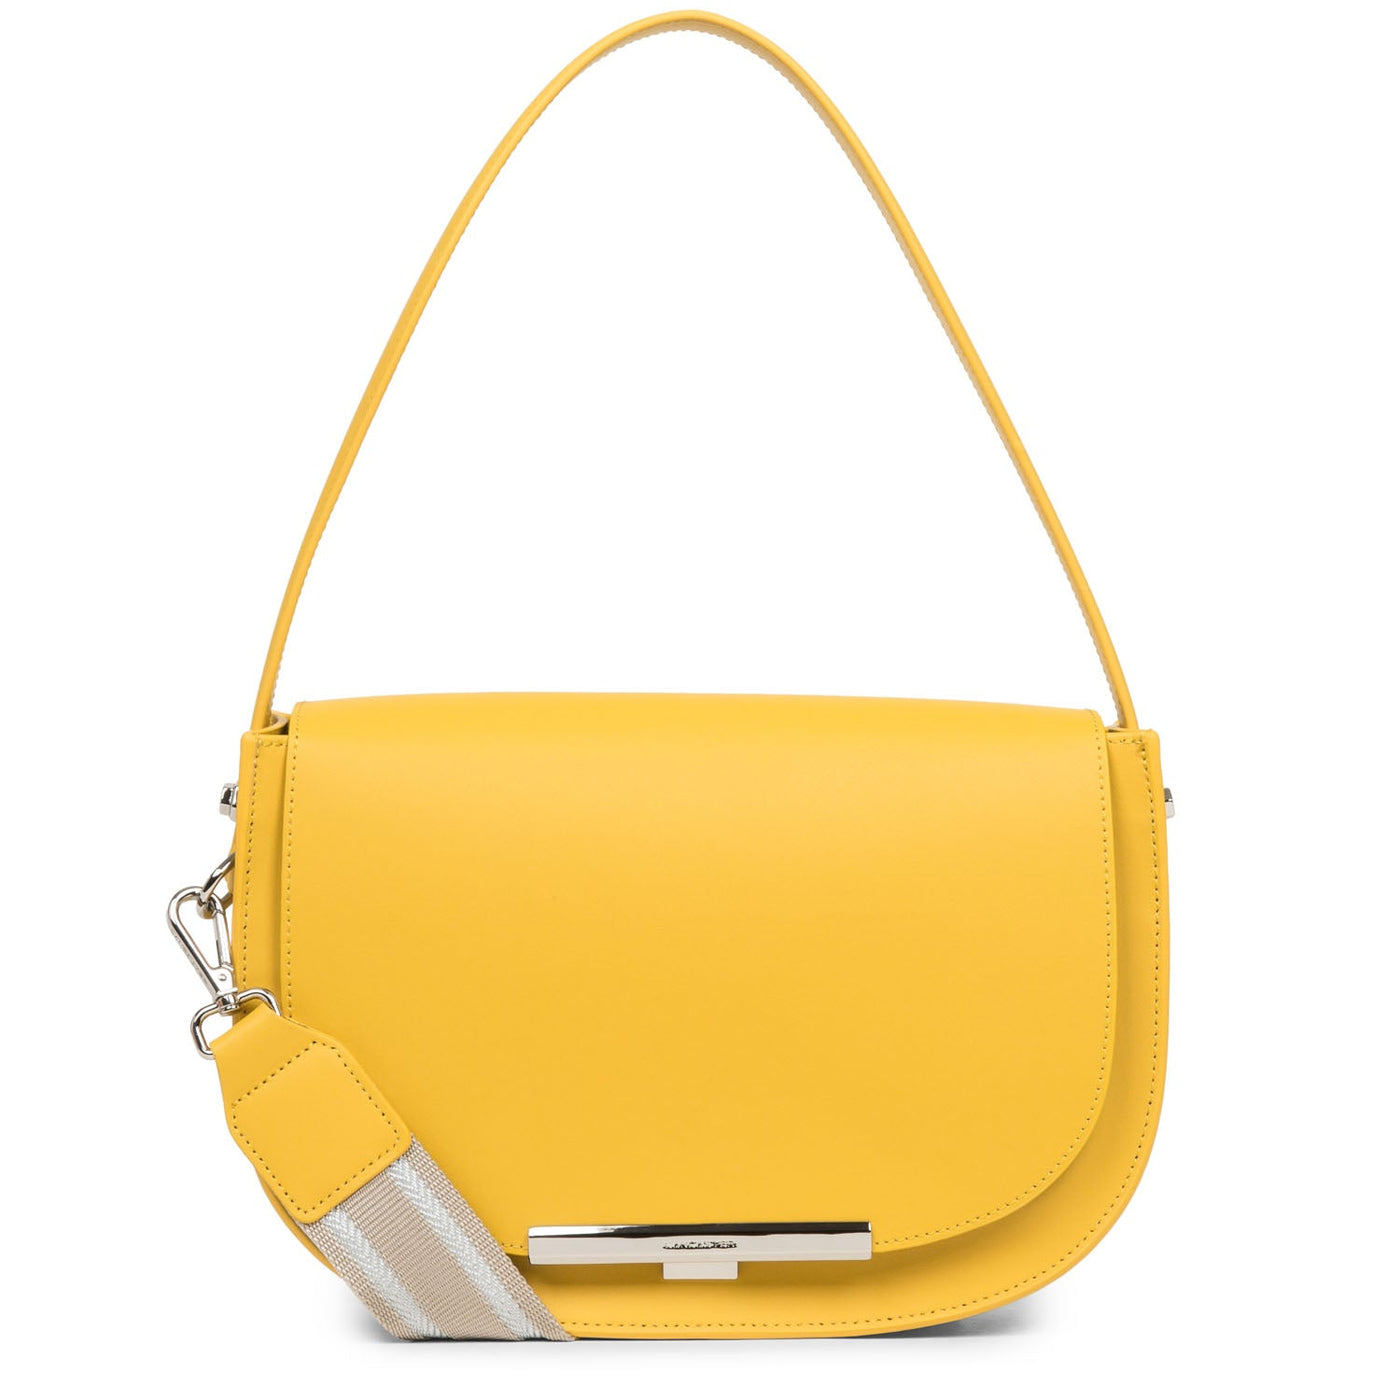 handbag - city lina #couleur_jaune